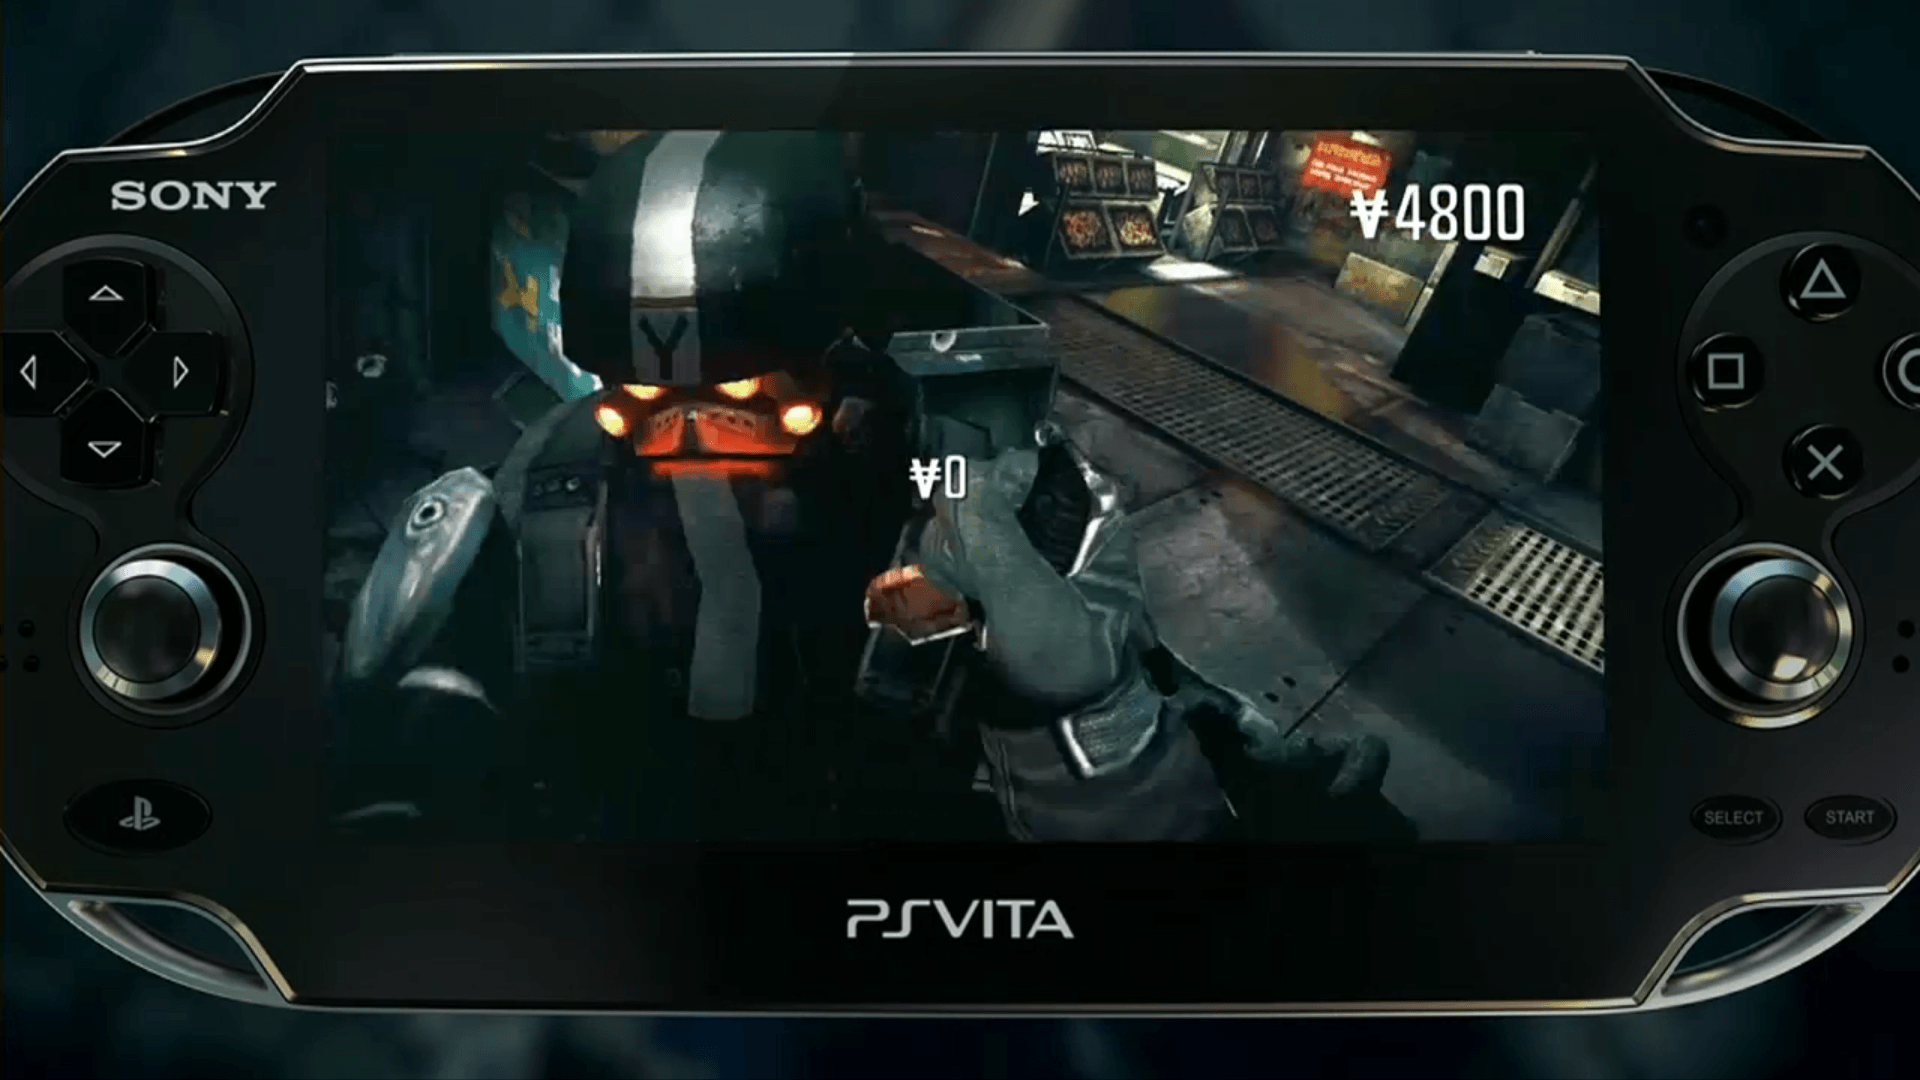 There's A New Killzone Coming To Vita